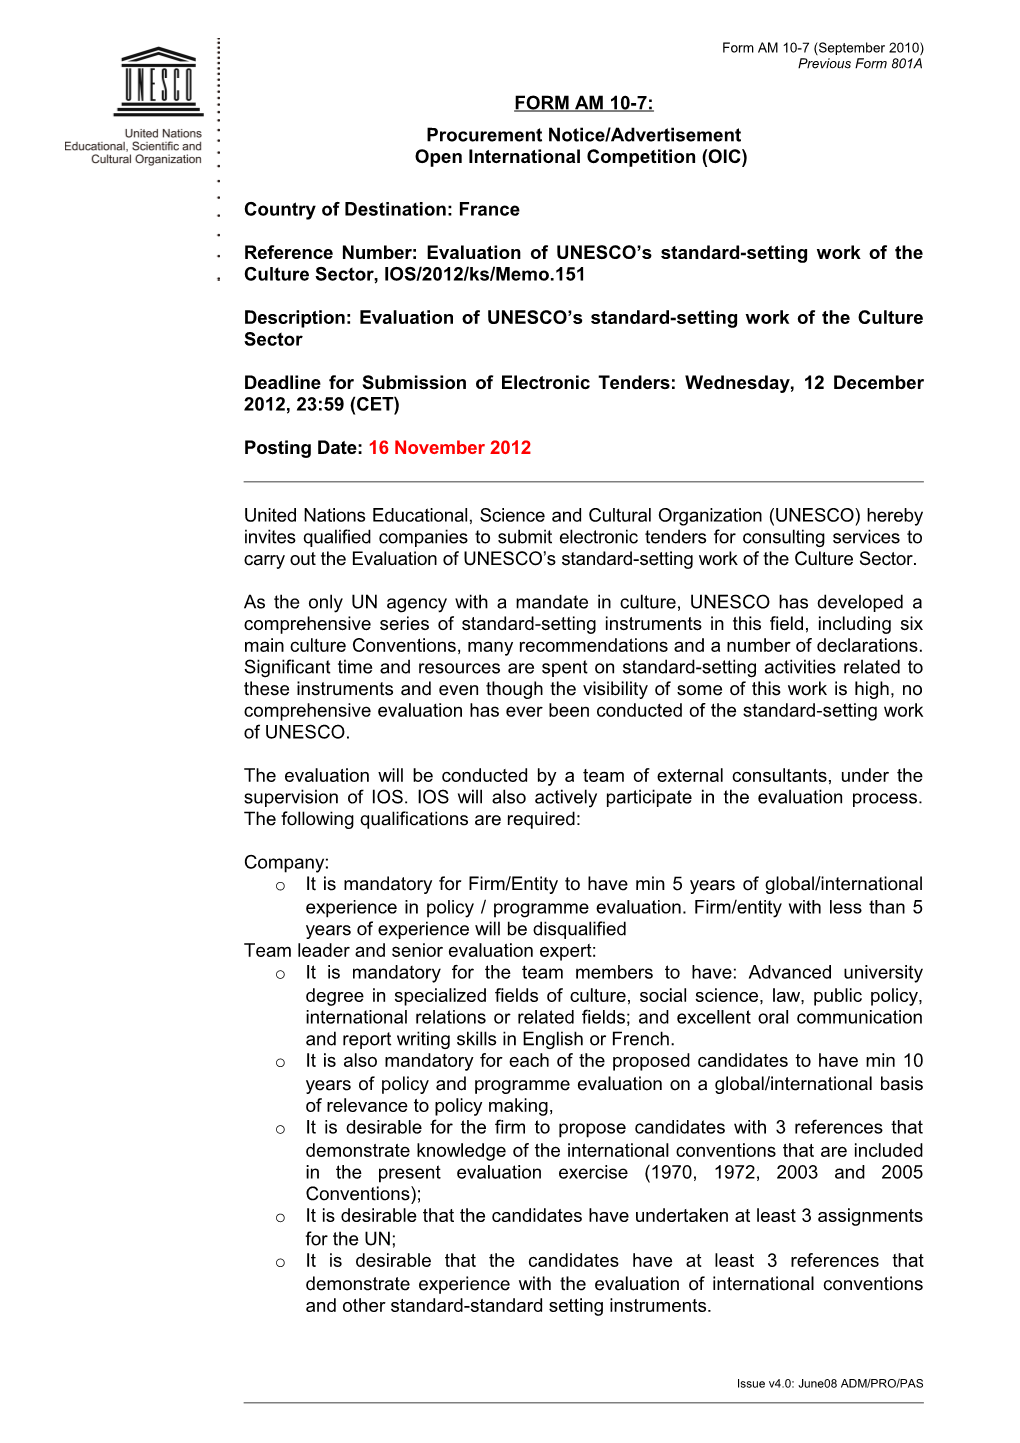 Procurement Notice/Advertisement - Open International Competition (OIC)